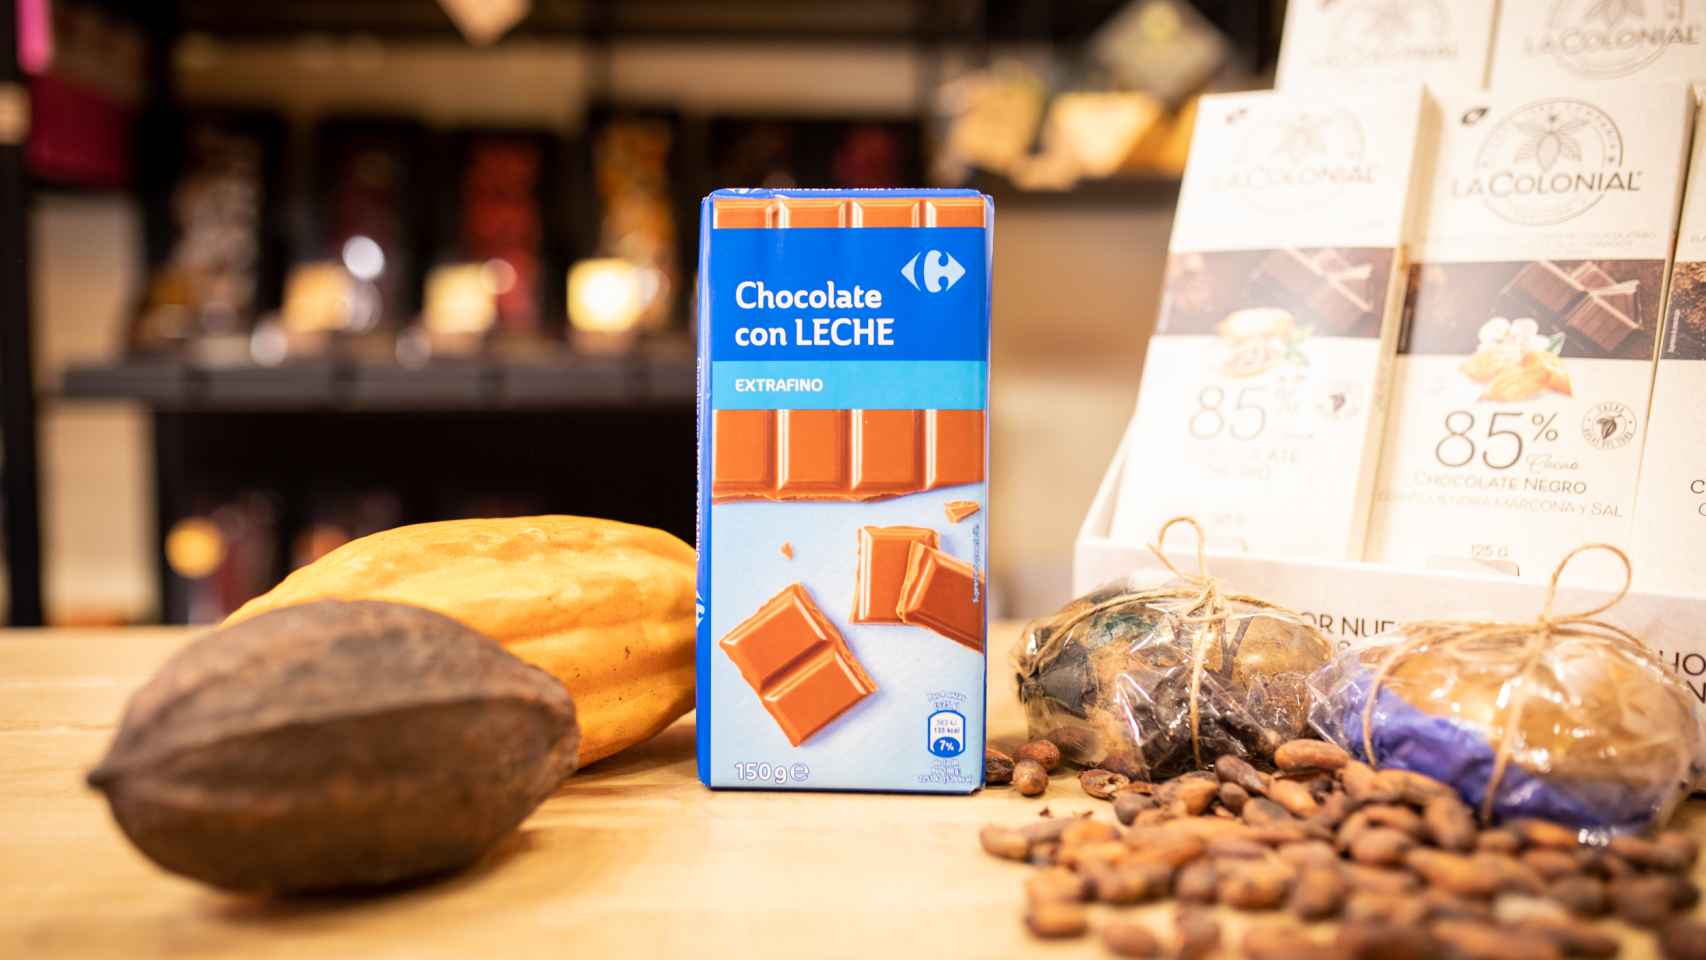 La tableta de chocolate con leche de Carrefour.